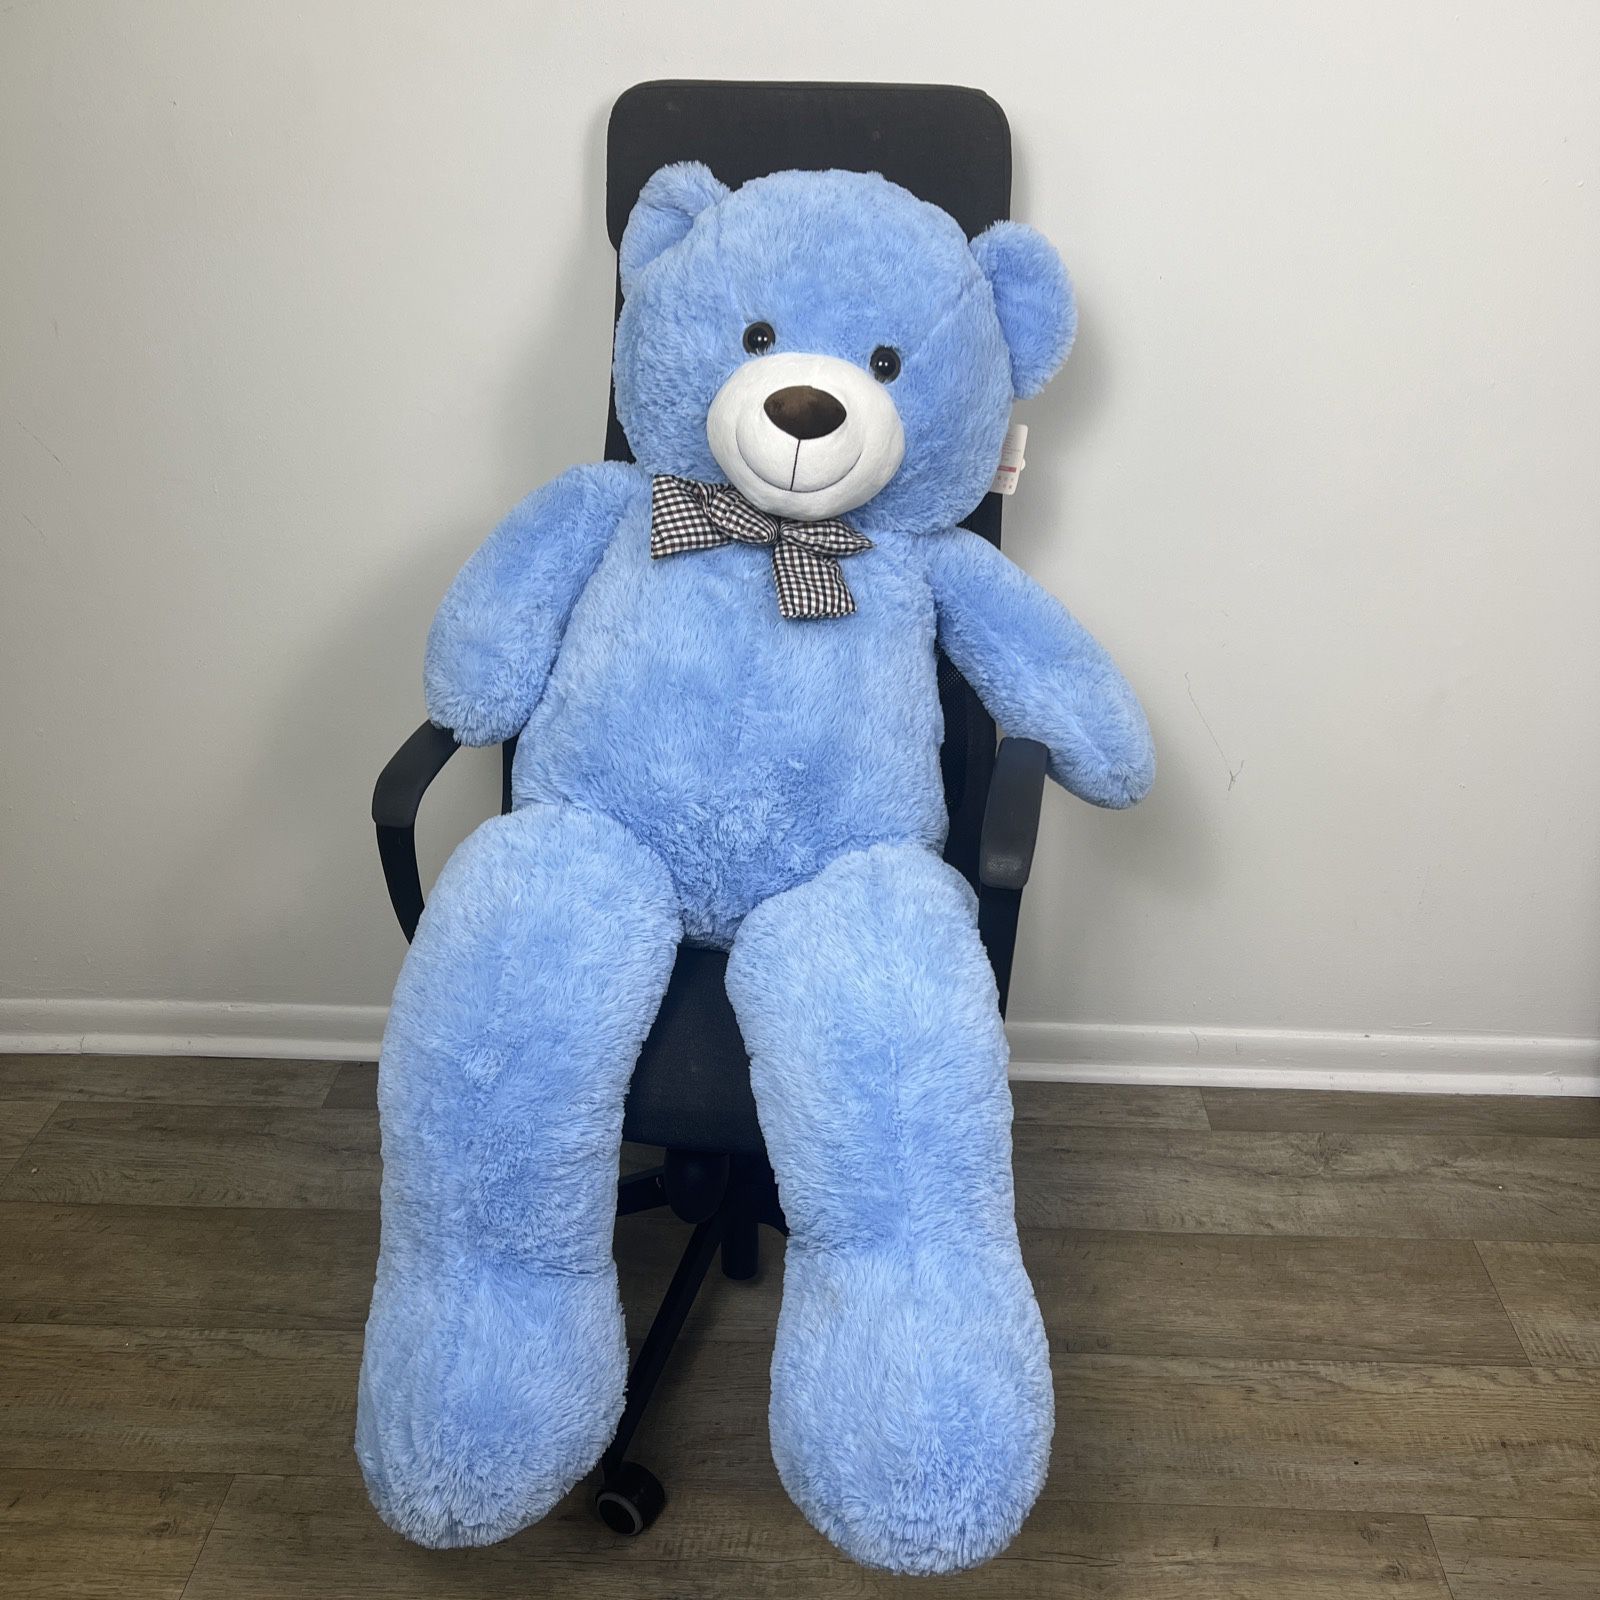 Giant 4ft Plush Teddy Bear Stuffed Animal Gift for Kids or Girlfriend